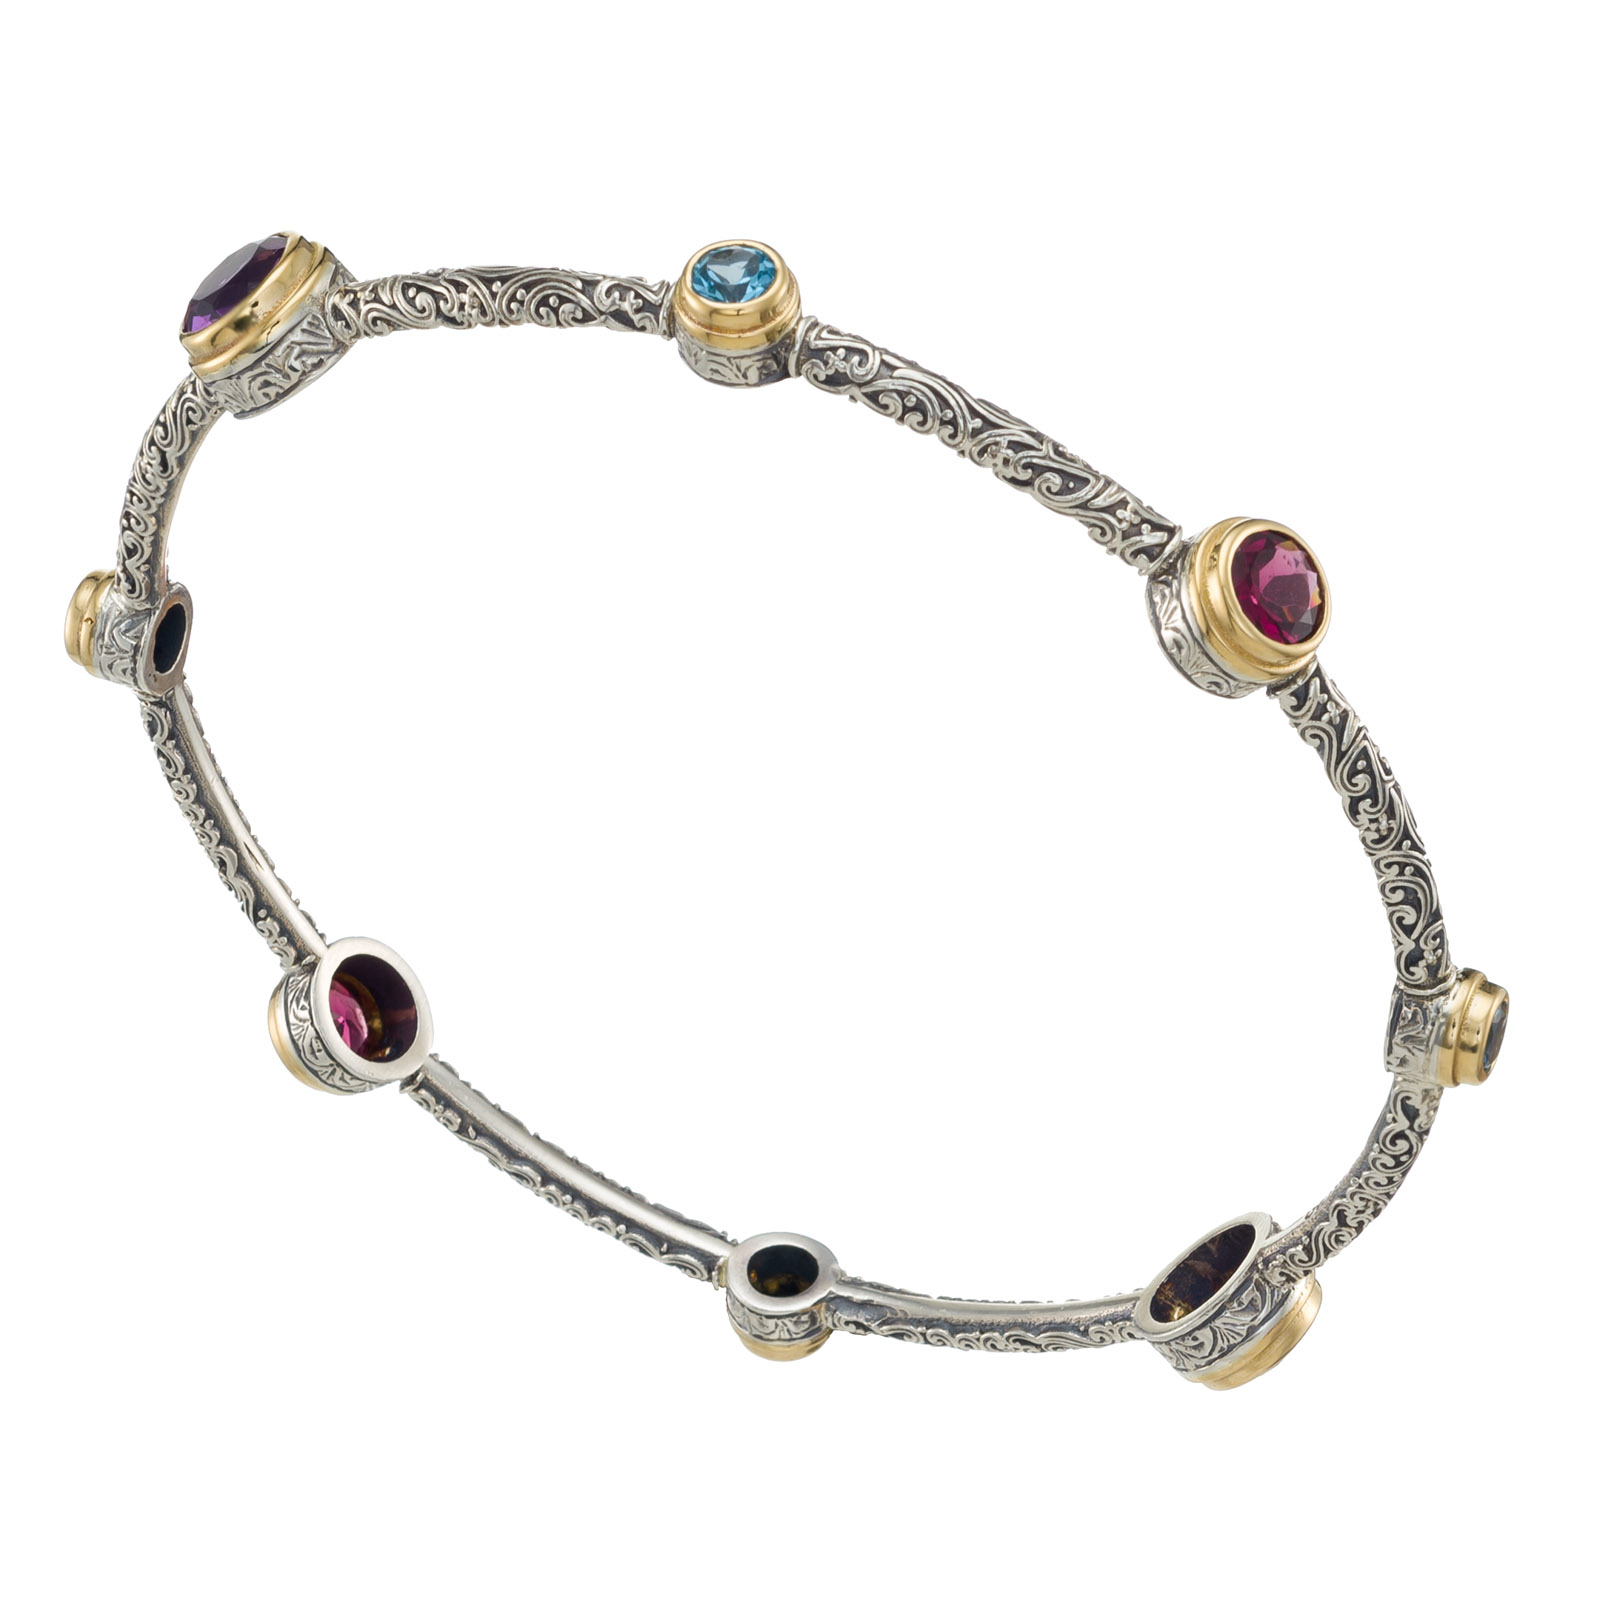 Bangle bracelet in 18K gold, sterling silver and natural stones